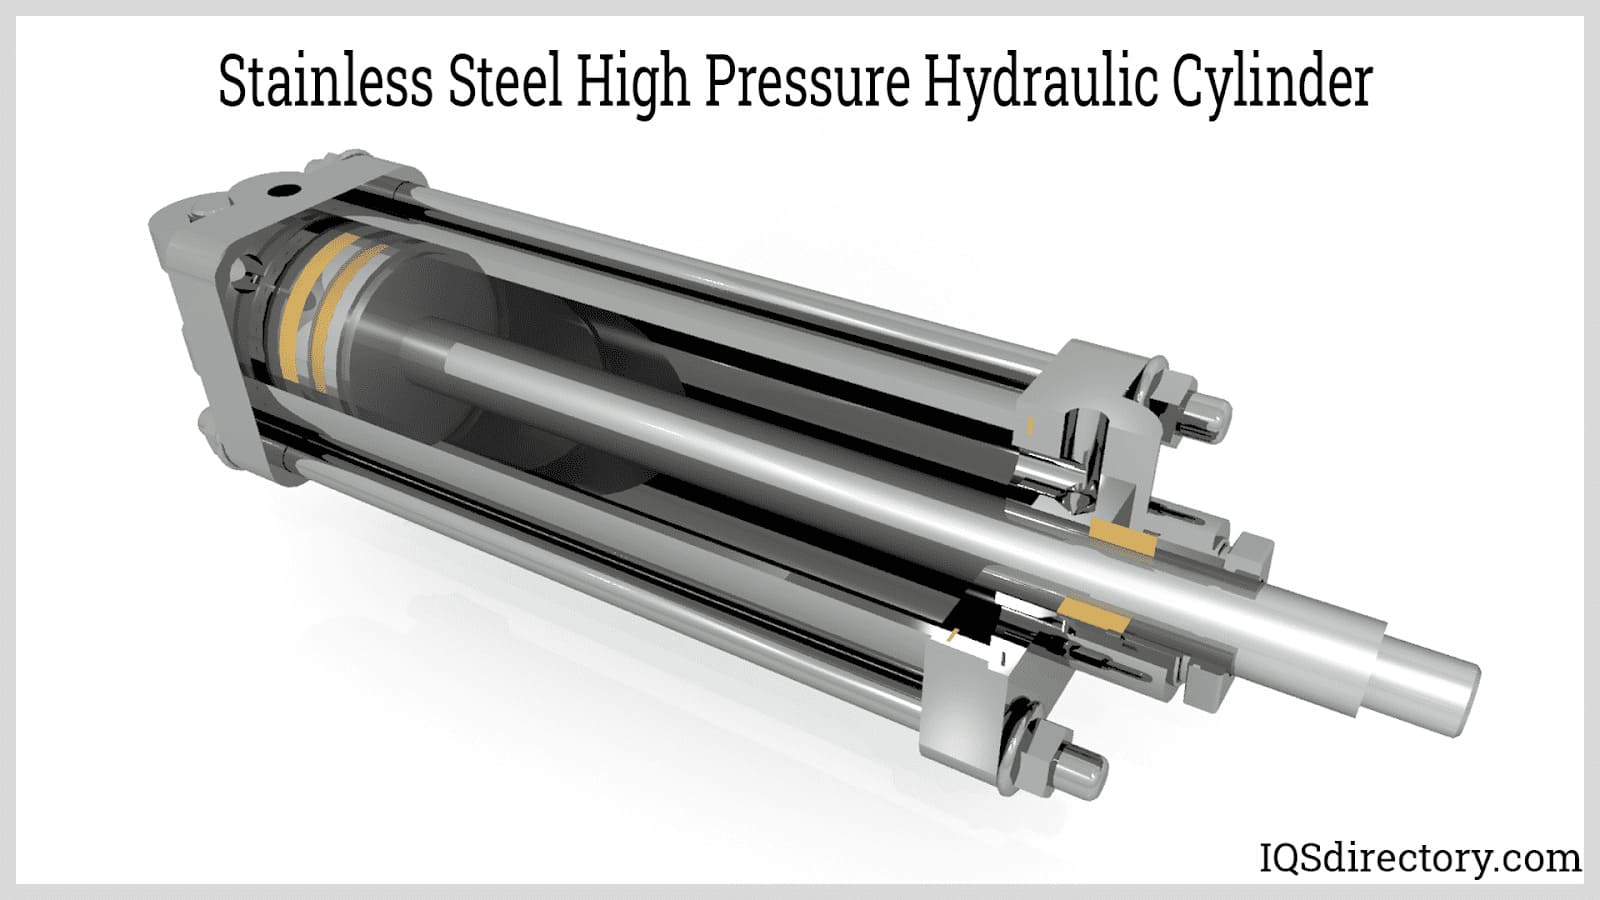 Stainless Steel High Pressure Hydraulic Cylinder